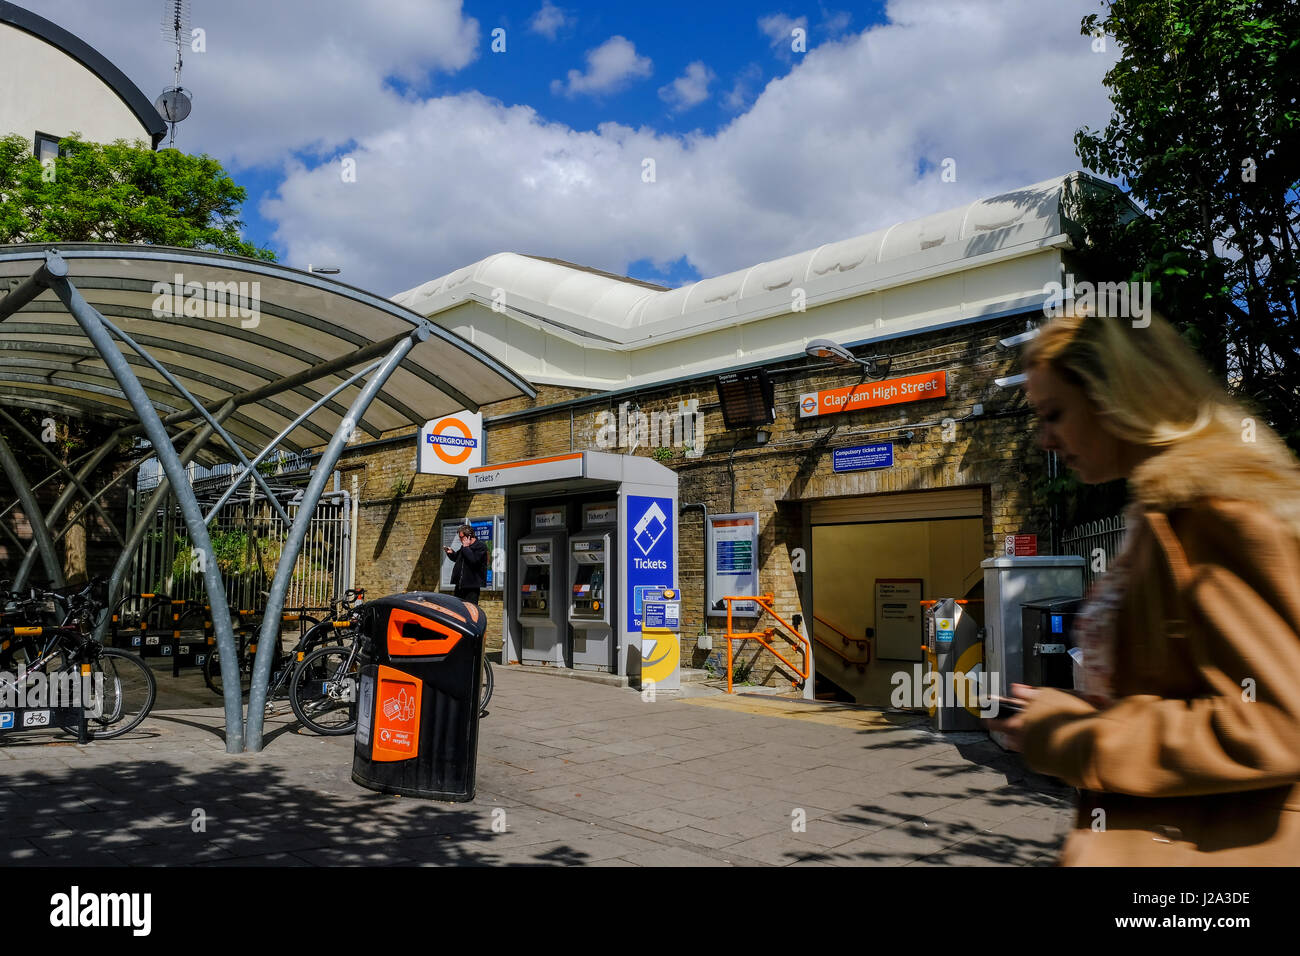 Clapham High Street overground station Stock Photo